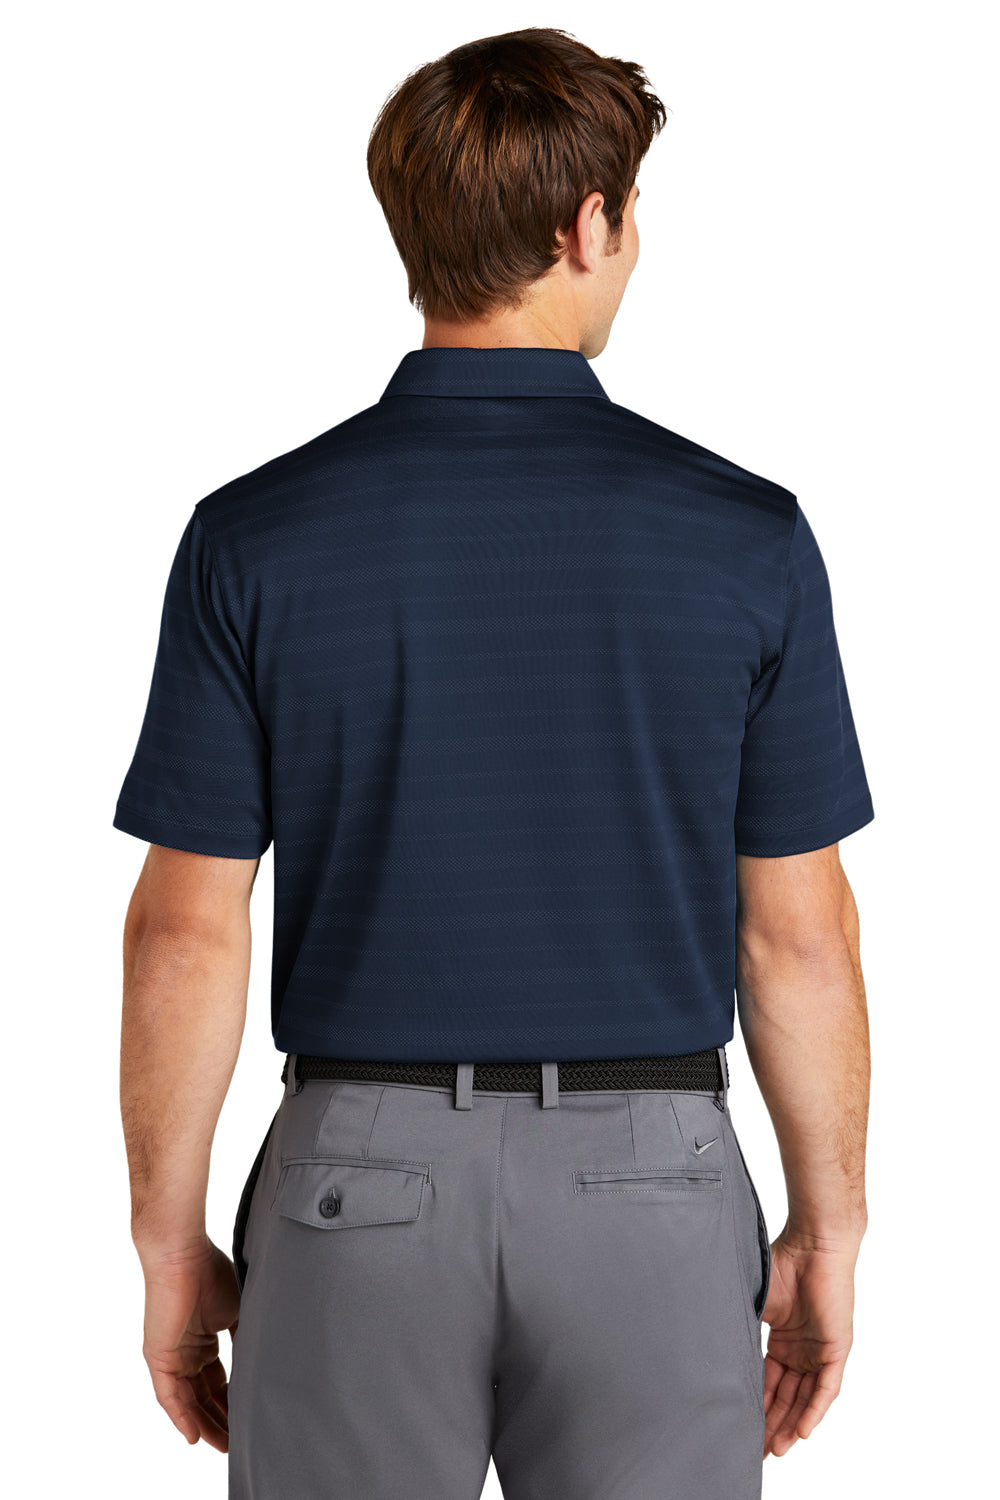 Nike NKDC2115 Mens Vapor Jacquard Dri-Fit Moisture Wicking Short Sleeve Polo Shirt Navy Blue Model Back